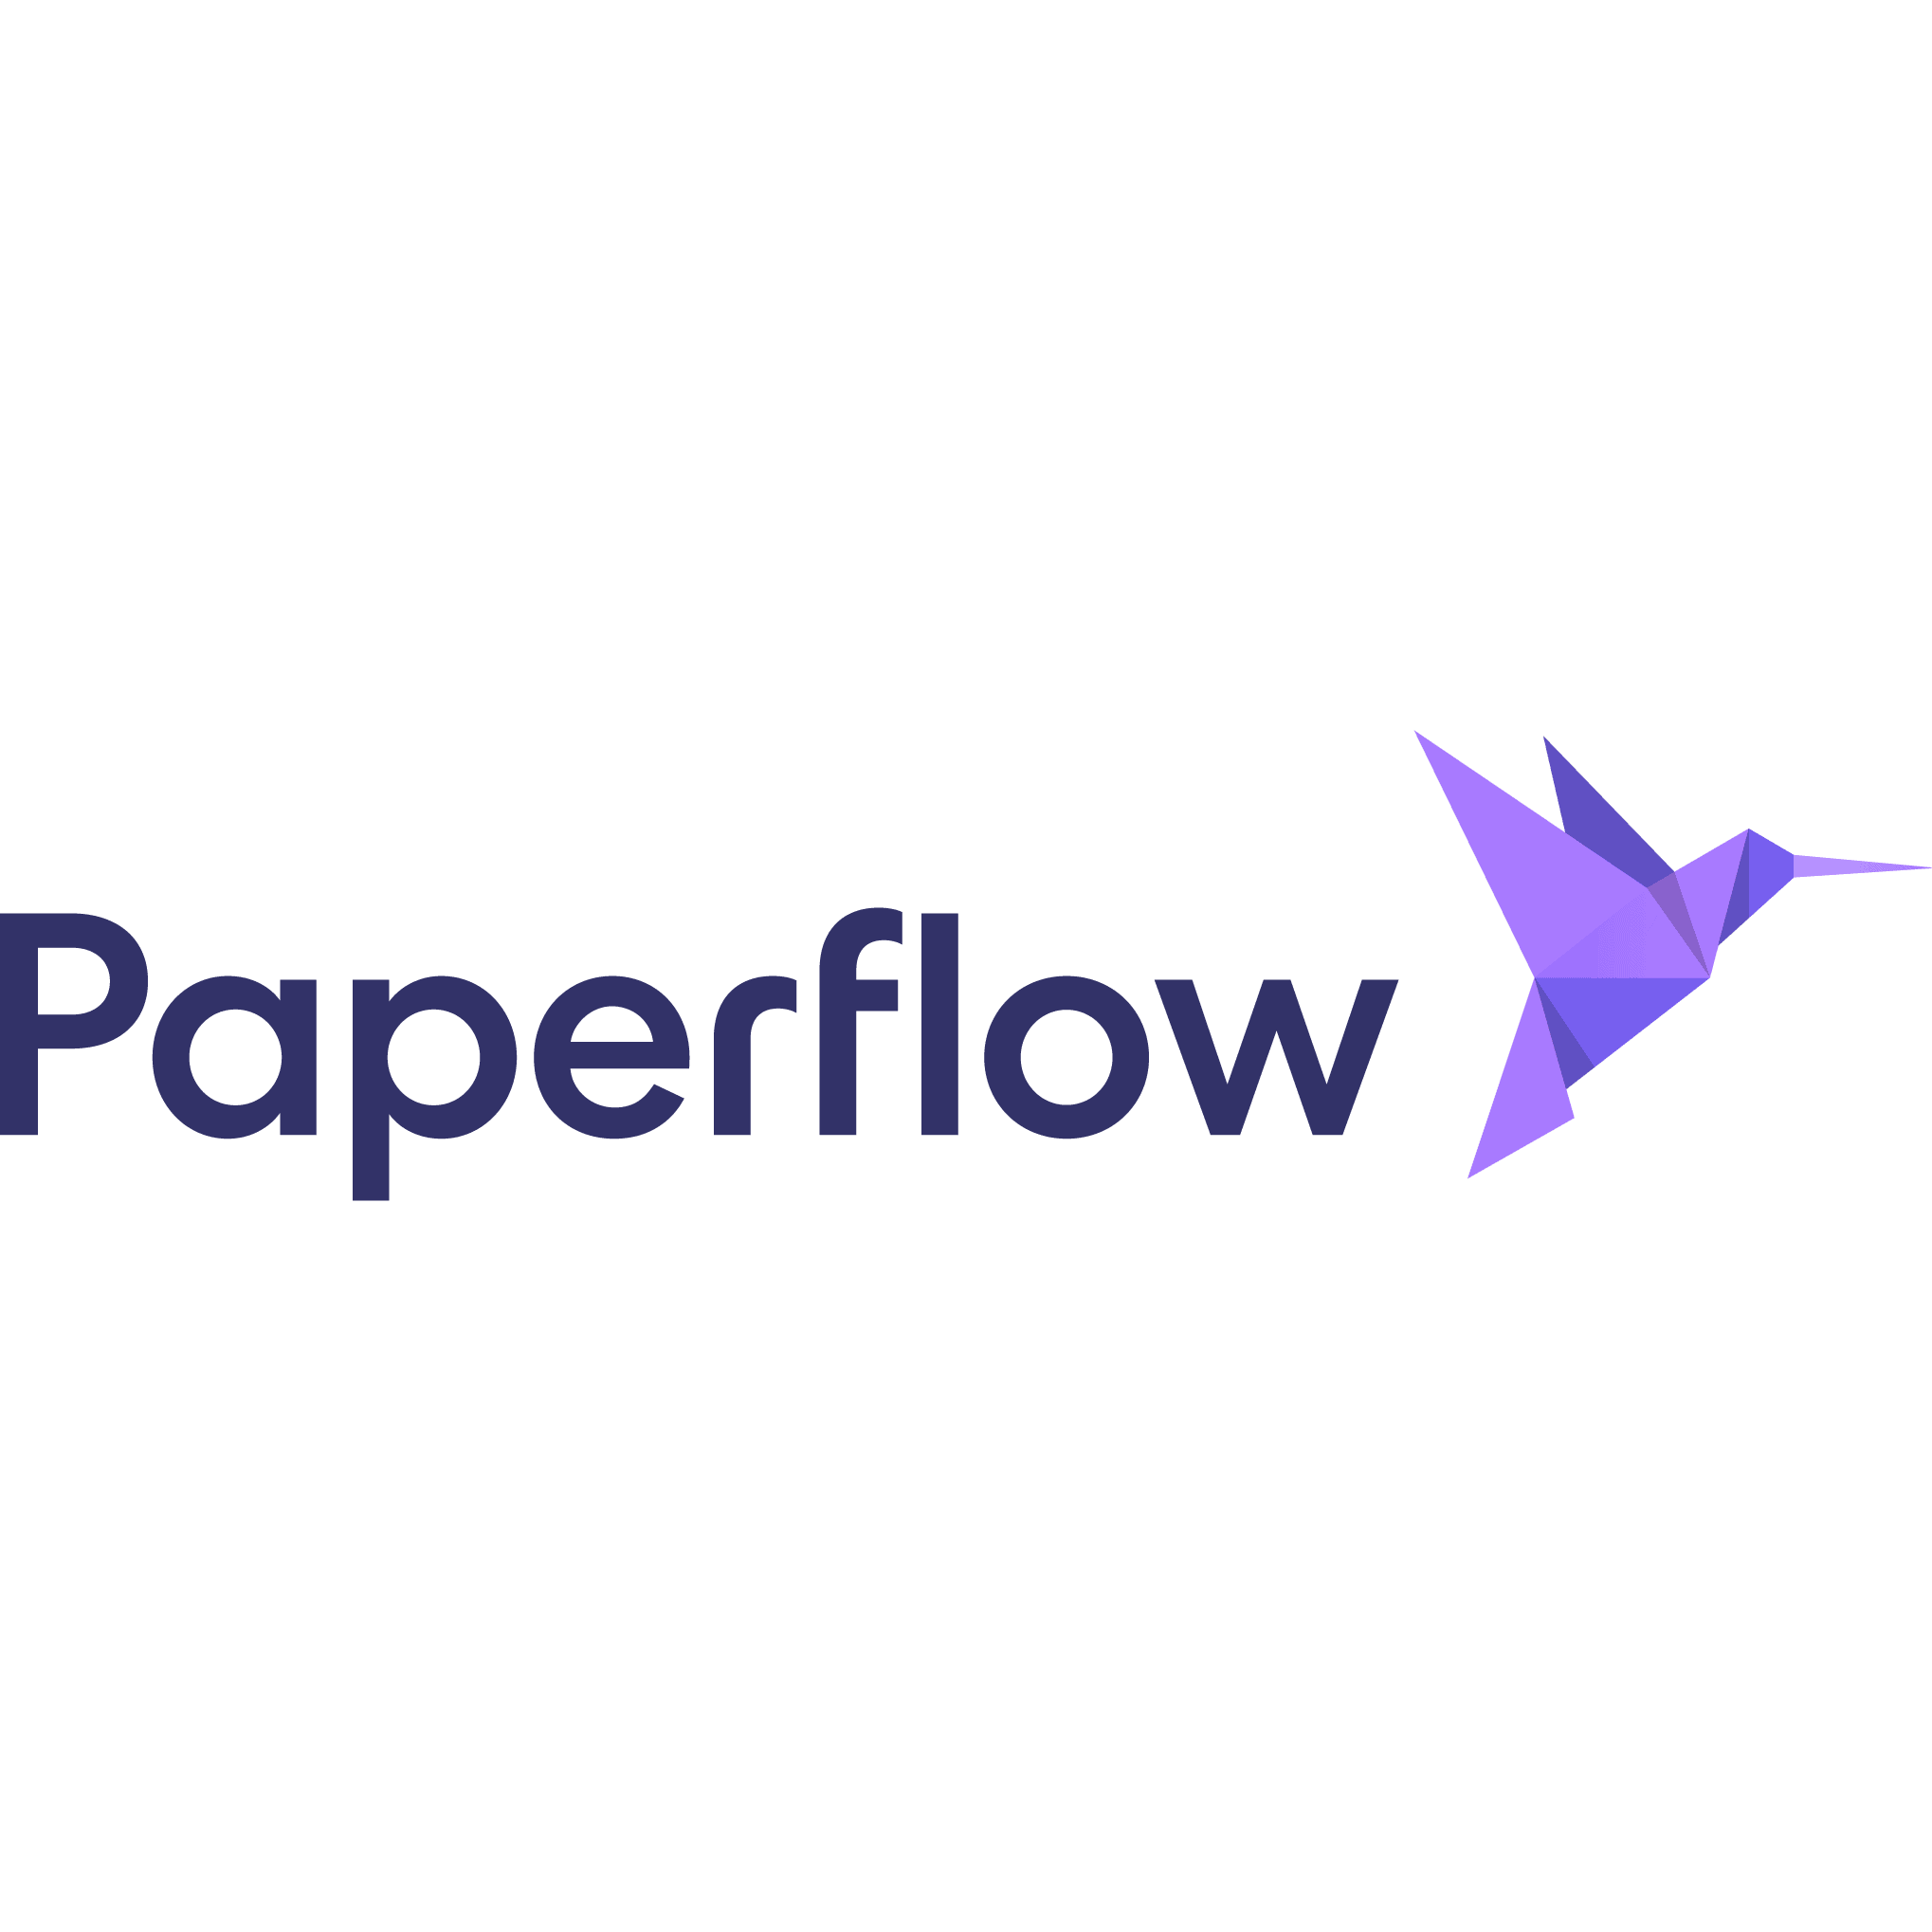 paperflow logo full colour rgb 1